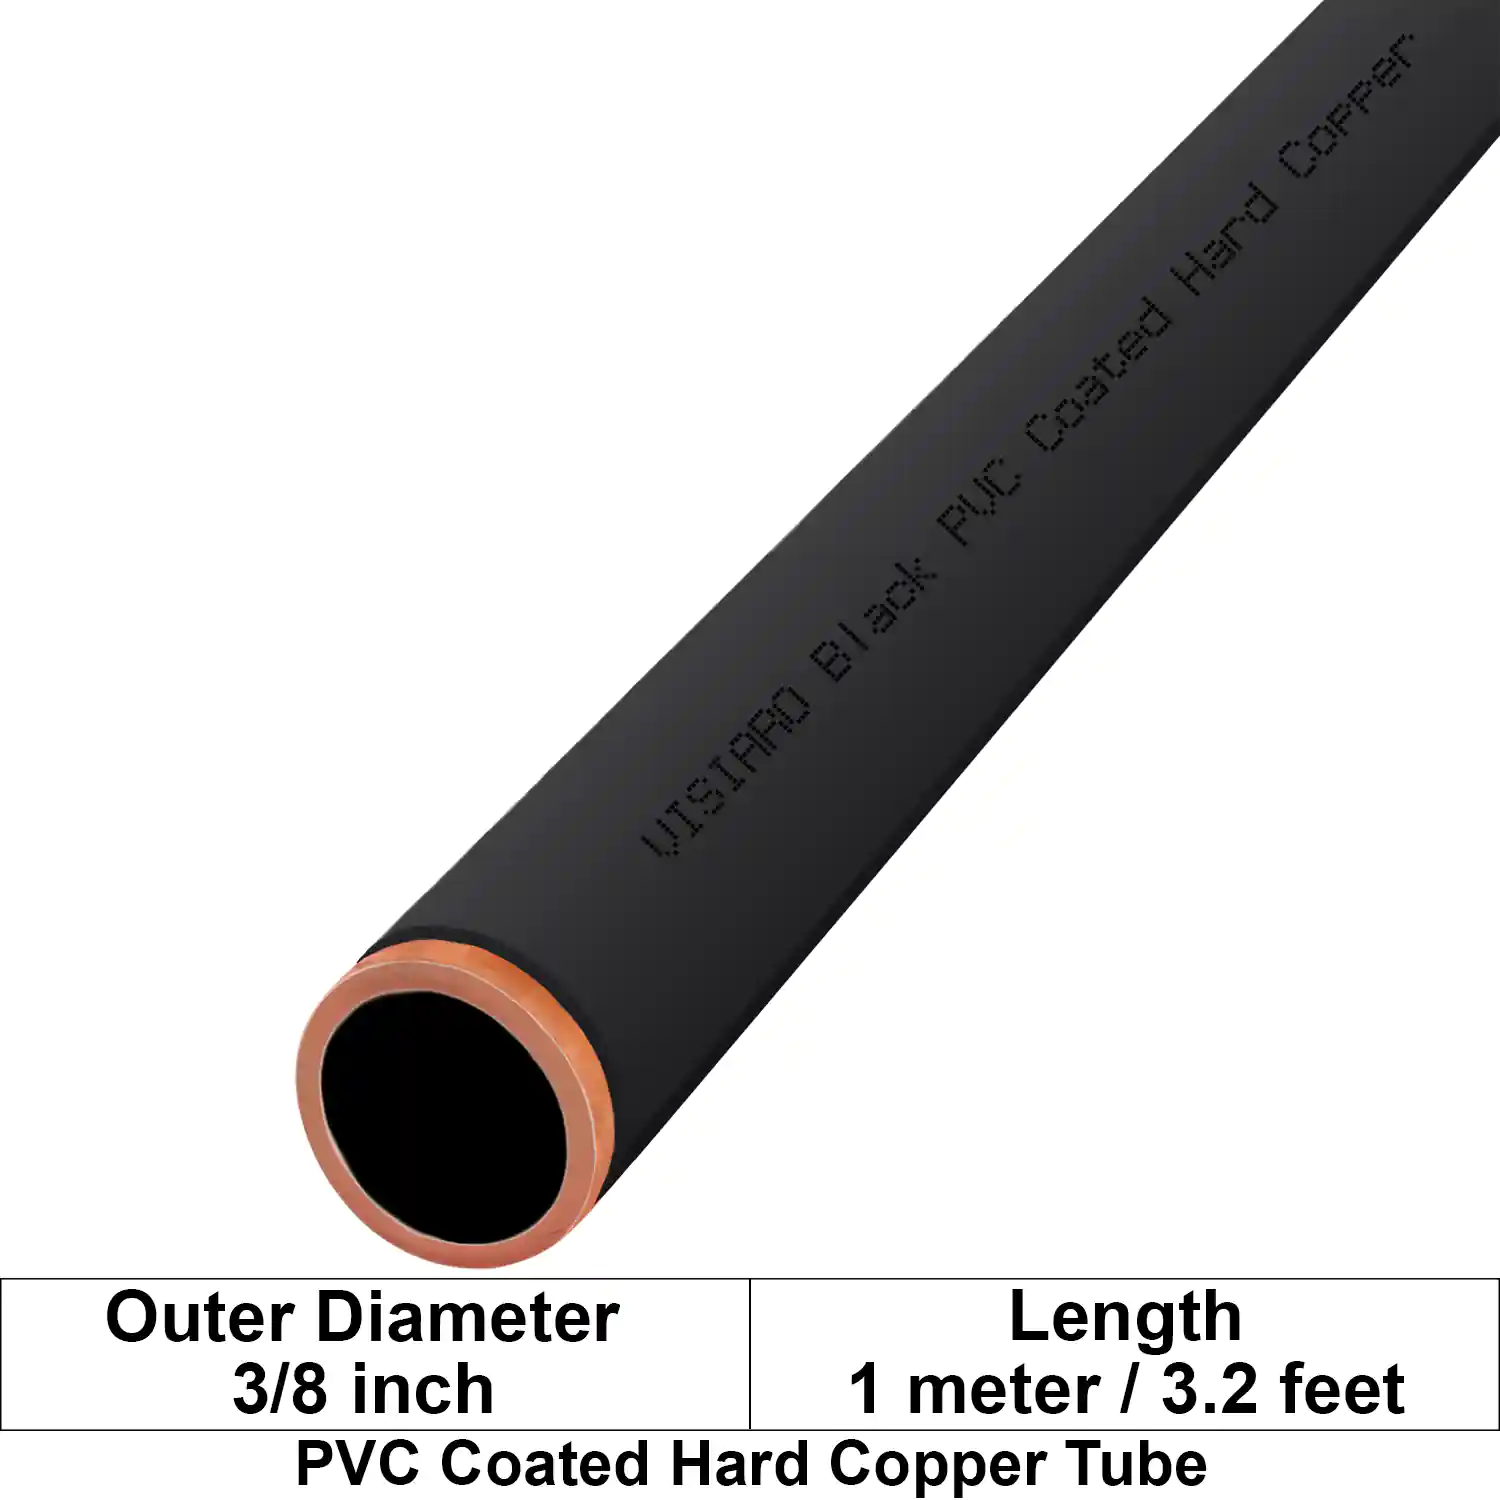 Visiaro Black PVC Coated Hard Copper Tube 1mtr long Outer Diameter - 3/8 inch